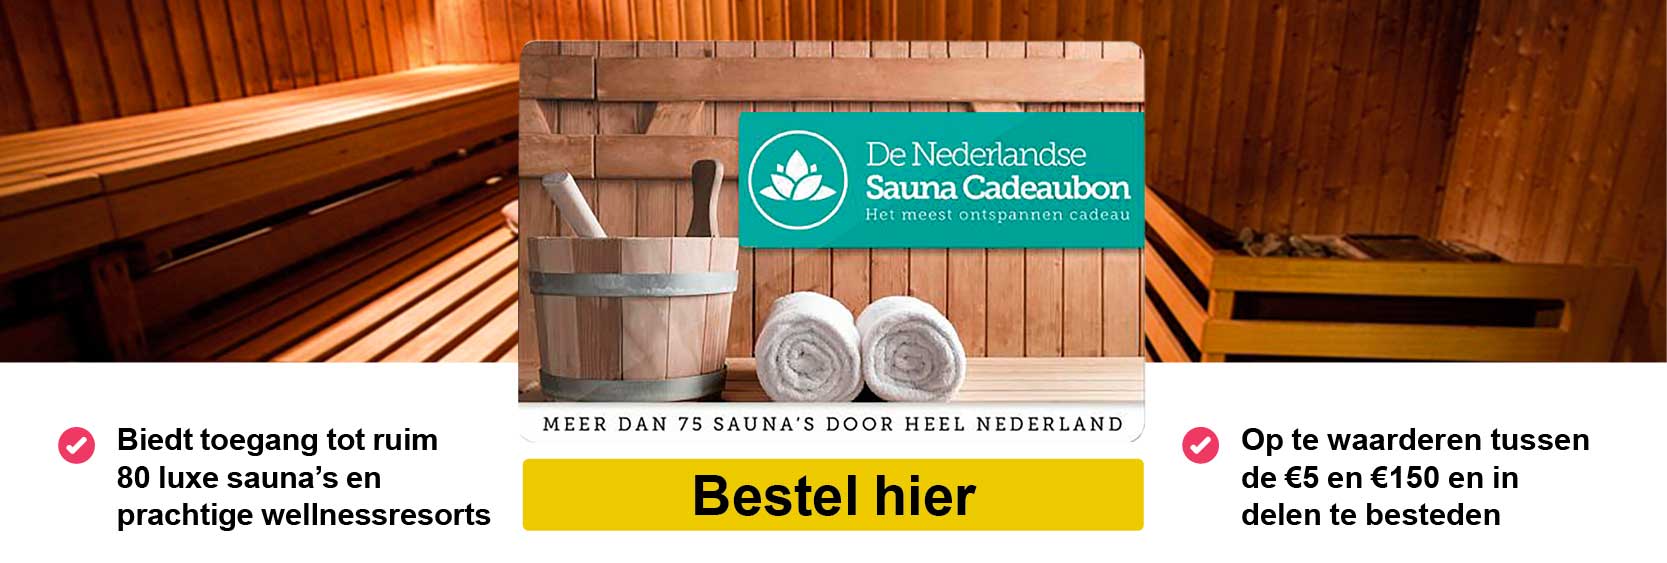 weigeren roem zegen De Nederlandse Sauna Cadeaubon|Sauna Cadeaukaarten | Alle Giftcards